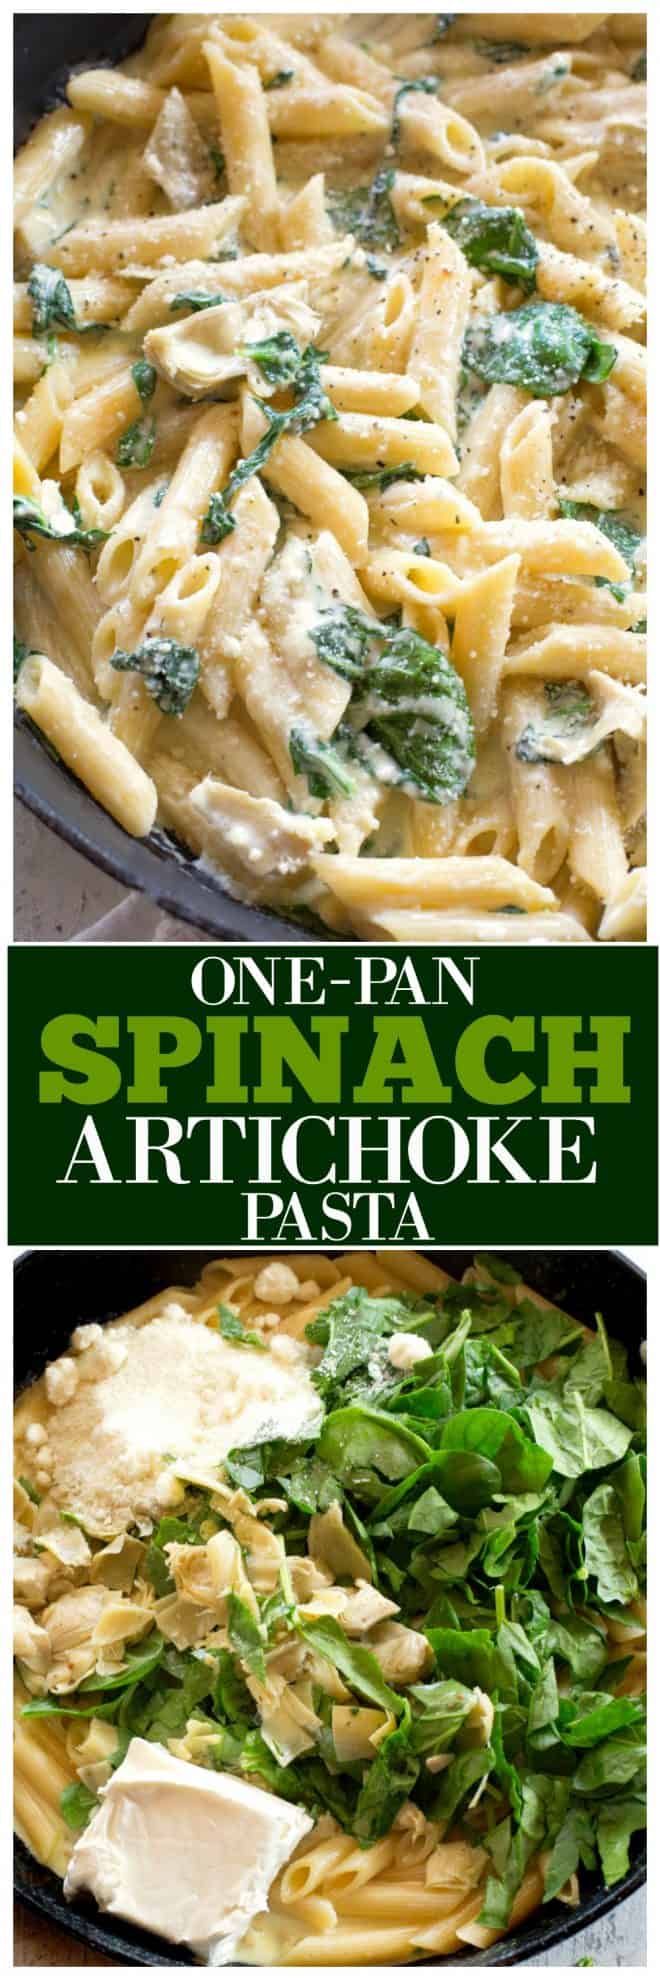 One-Pan Spinach Artichoke Pasta